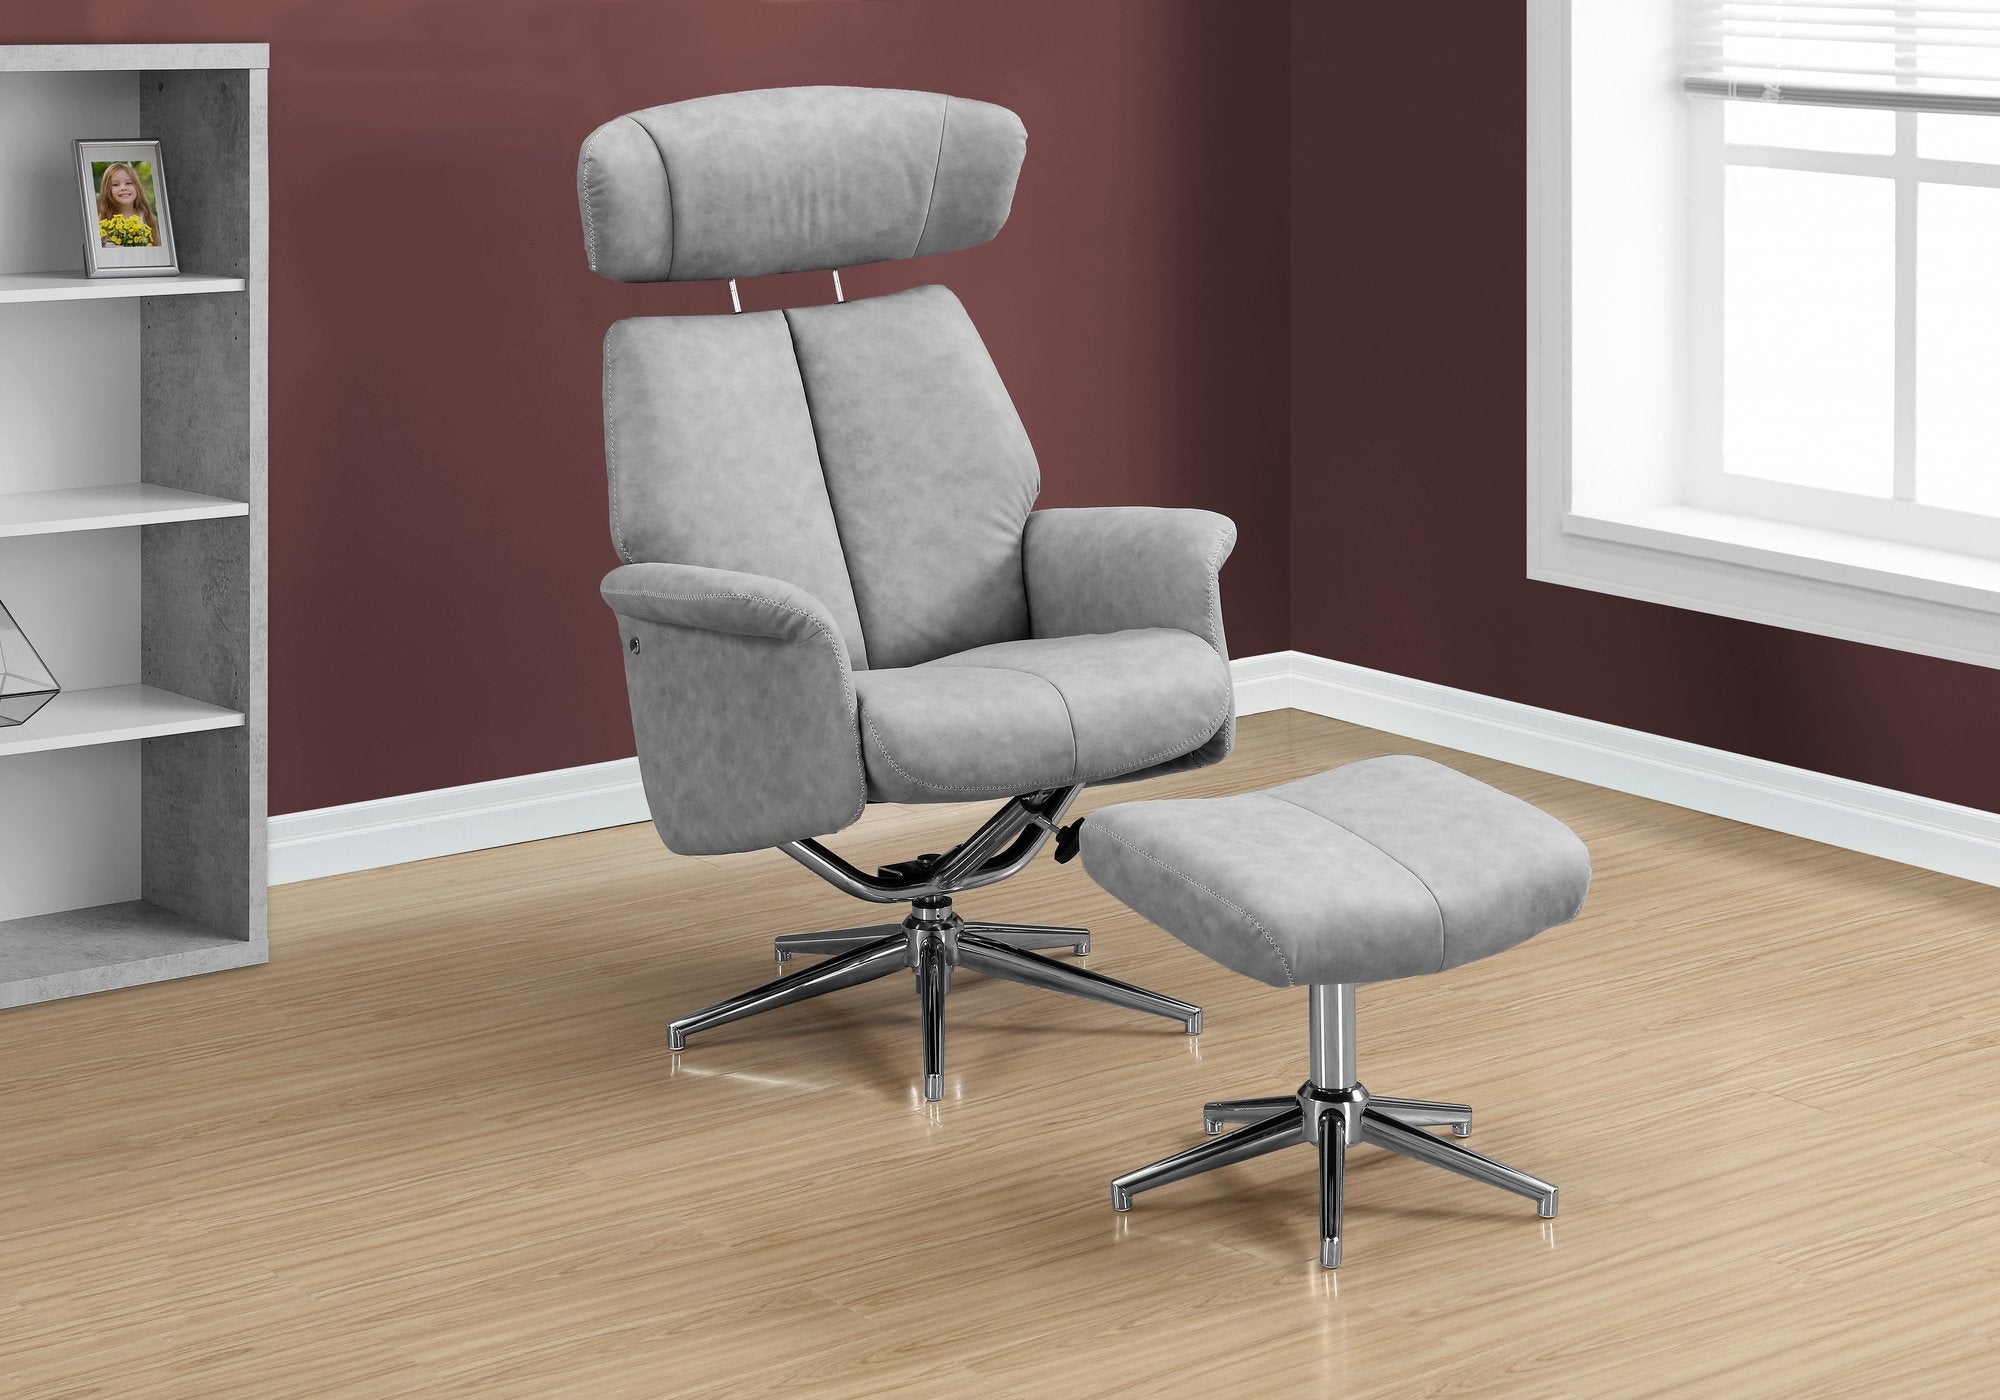 reclining chair 2pcs set grey swivel  adjust headrest i8139